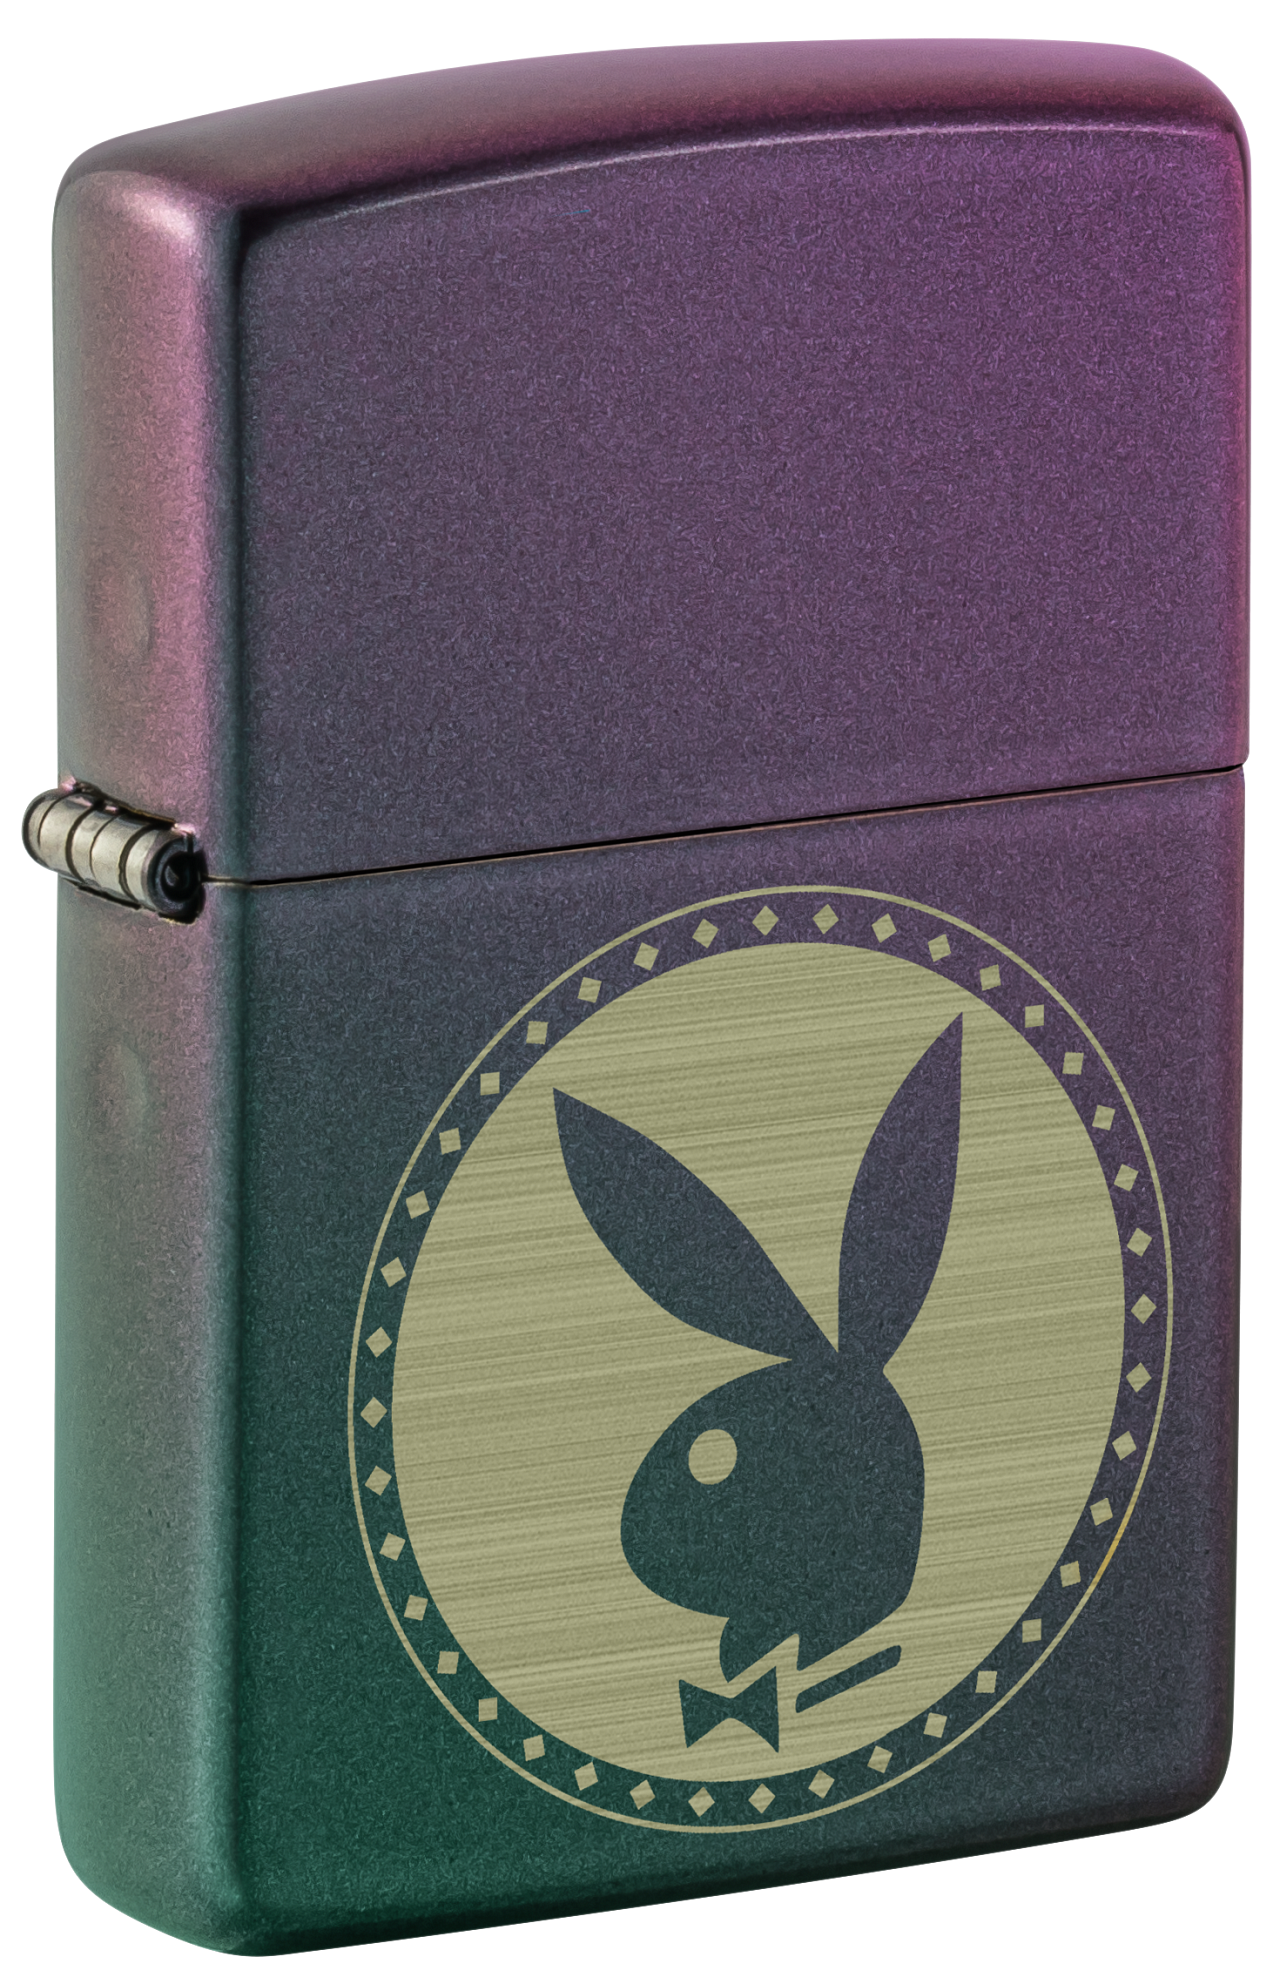 Zippo Playboy Logo Laser Engraved, Iridescent Finish Lighter #48380